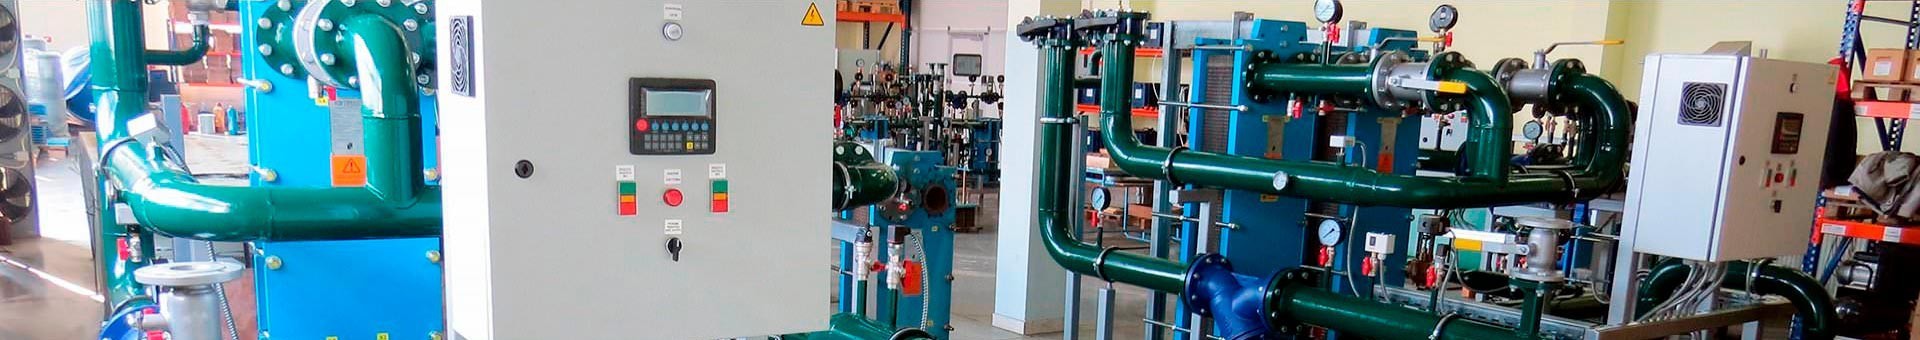 Supply of a Clorius G3FMT Dn 350 threeway control valve for a quarterly boiler room